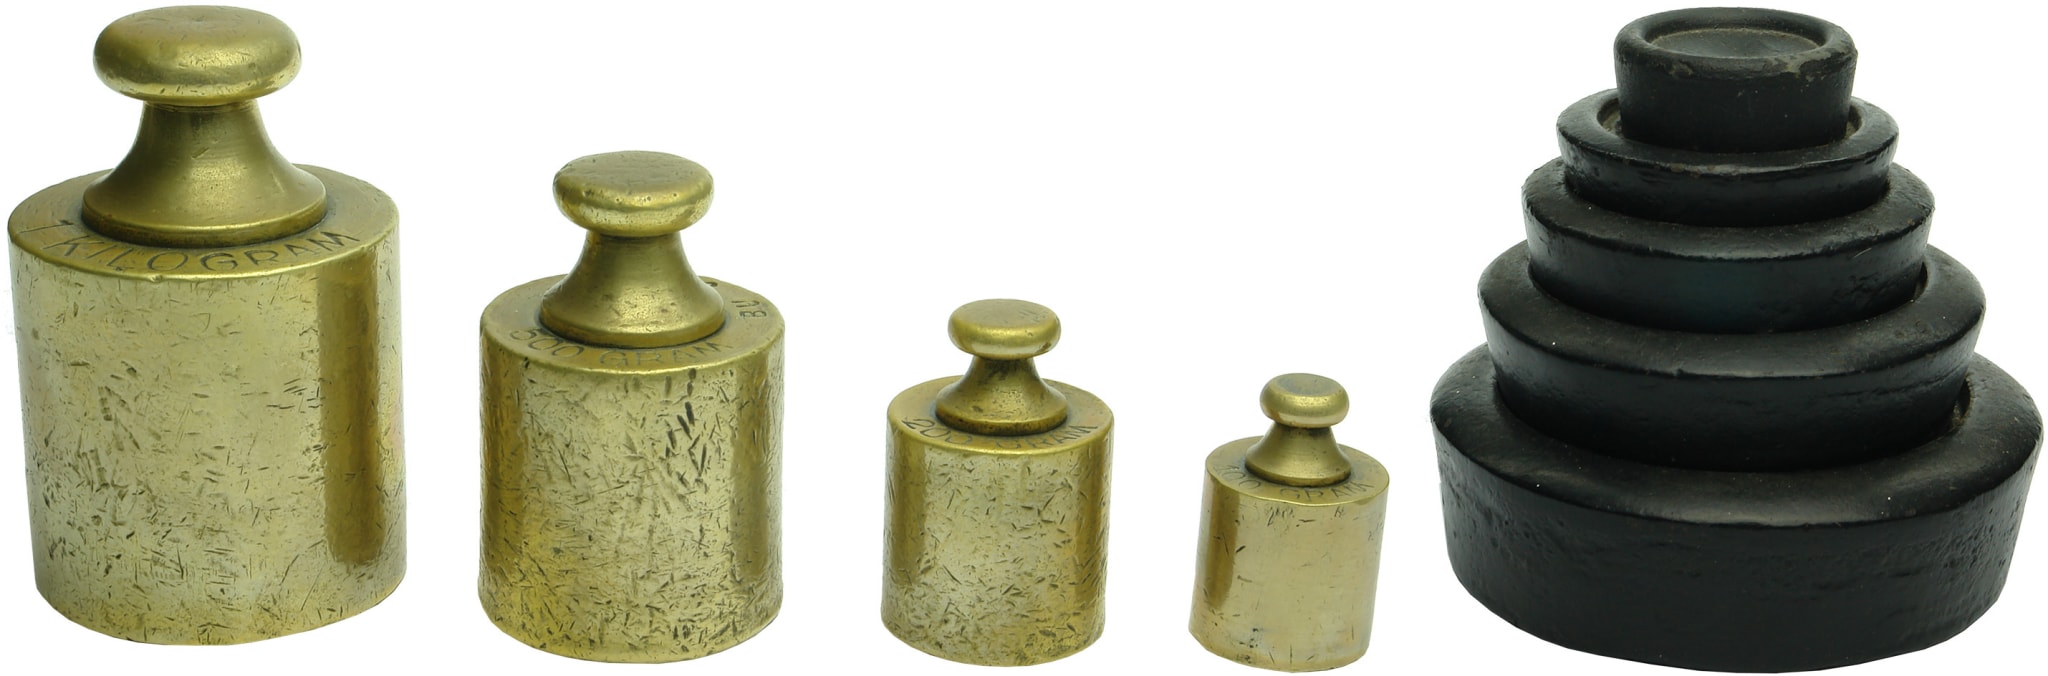 Antique Brass Cast Iron Weights